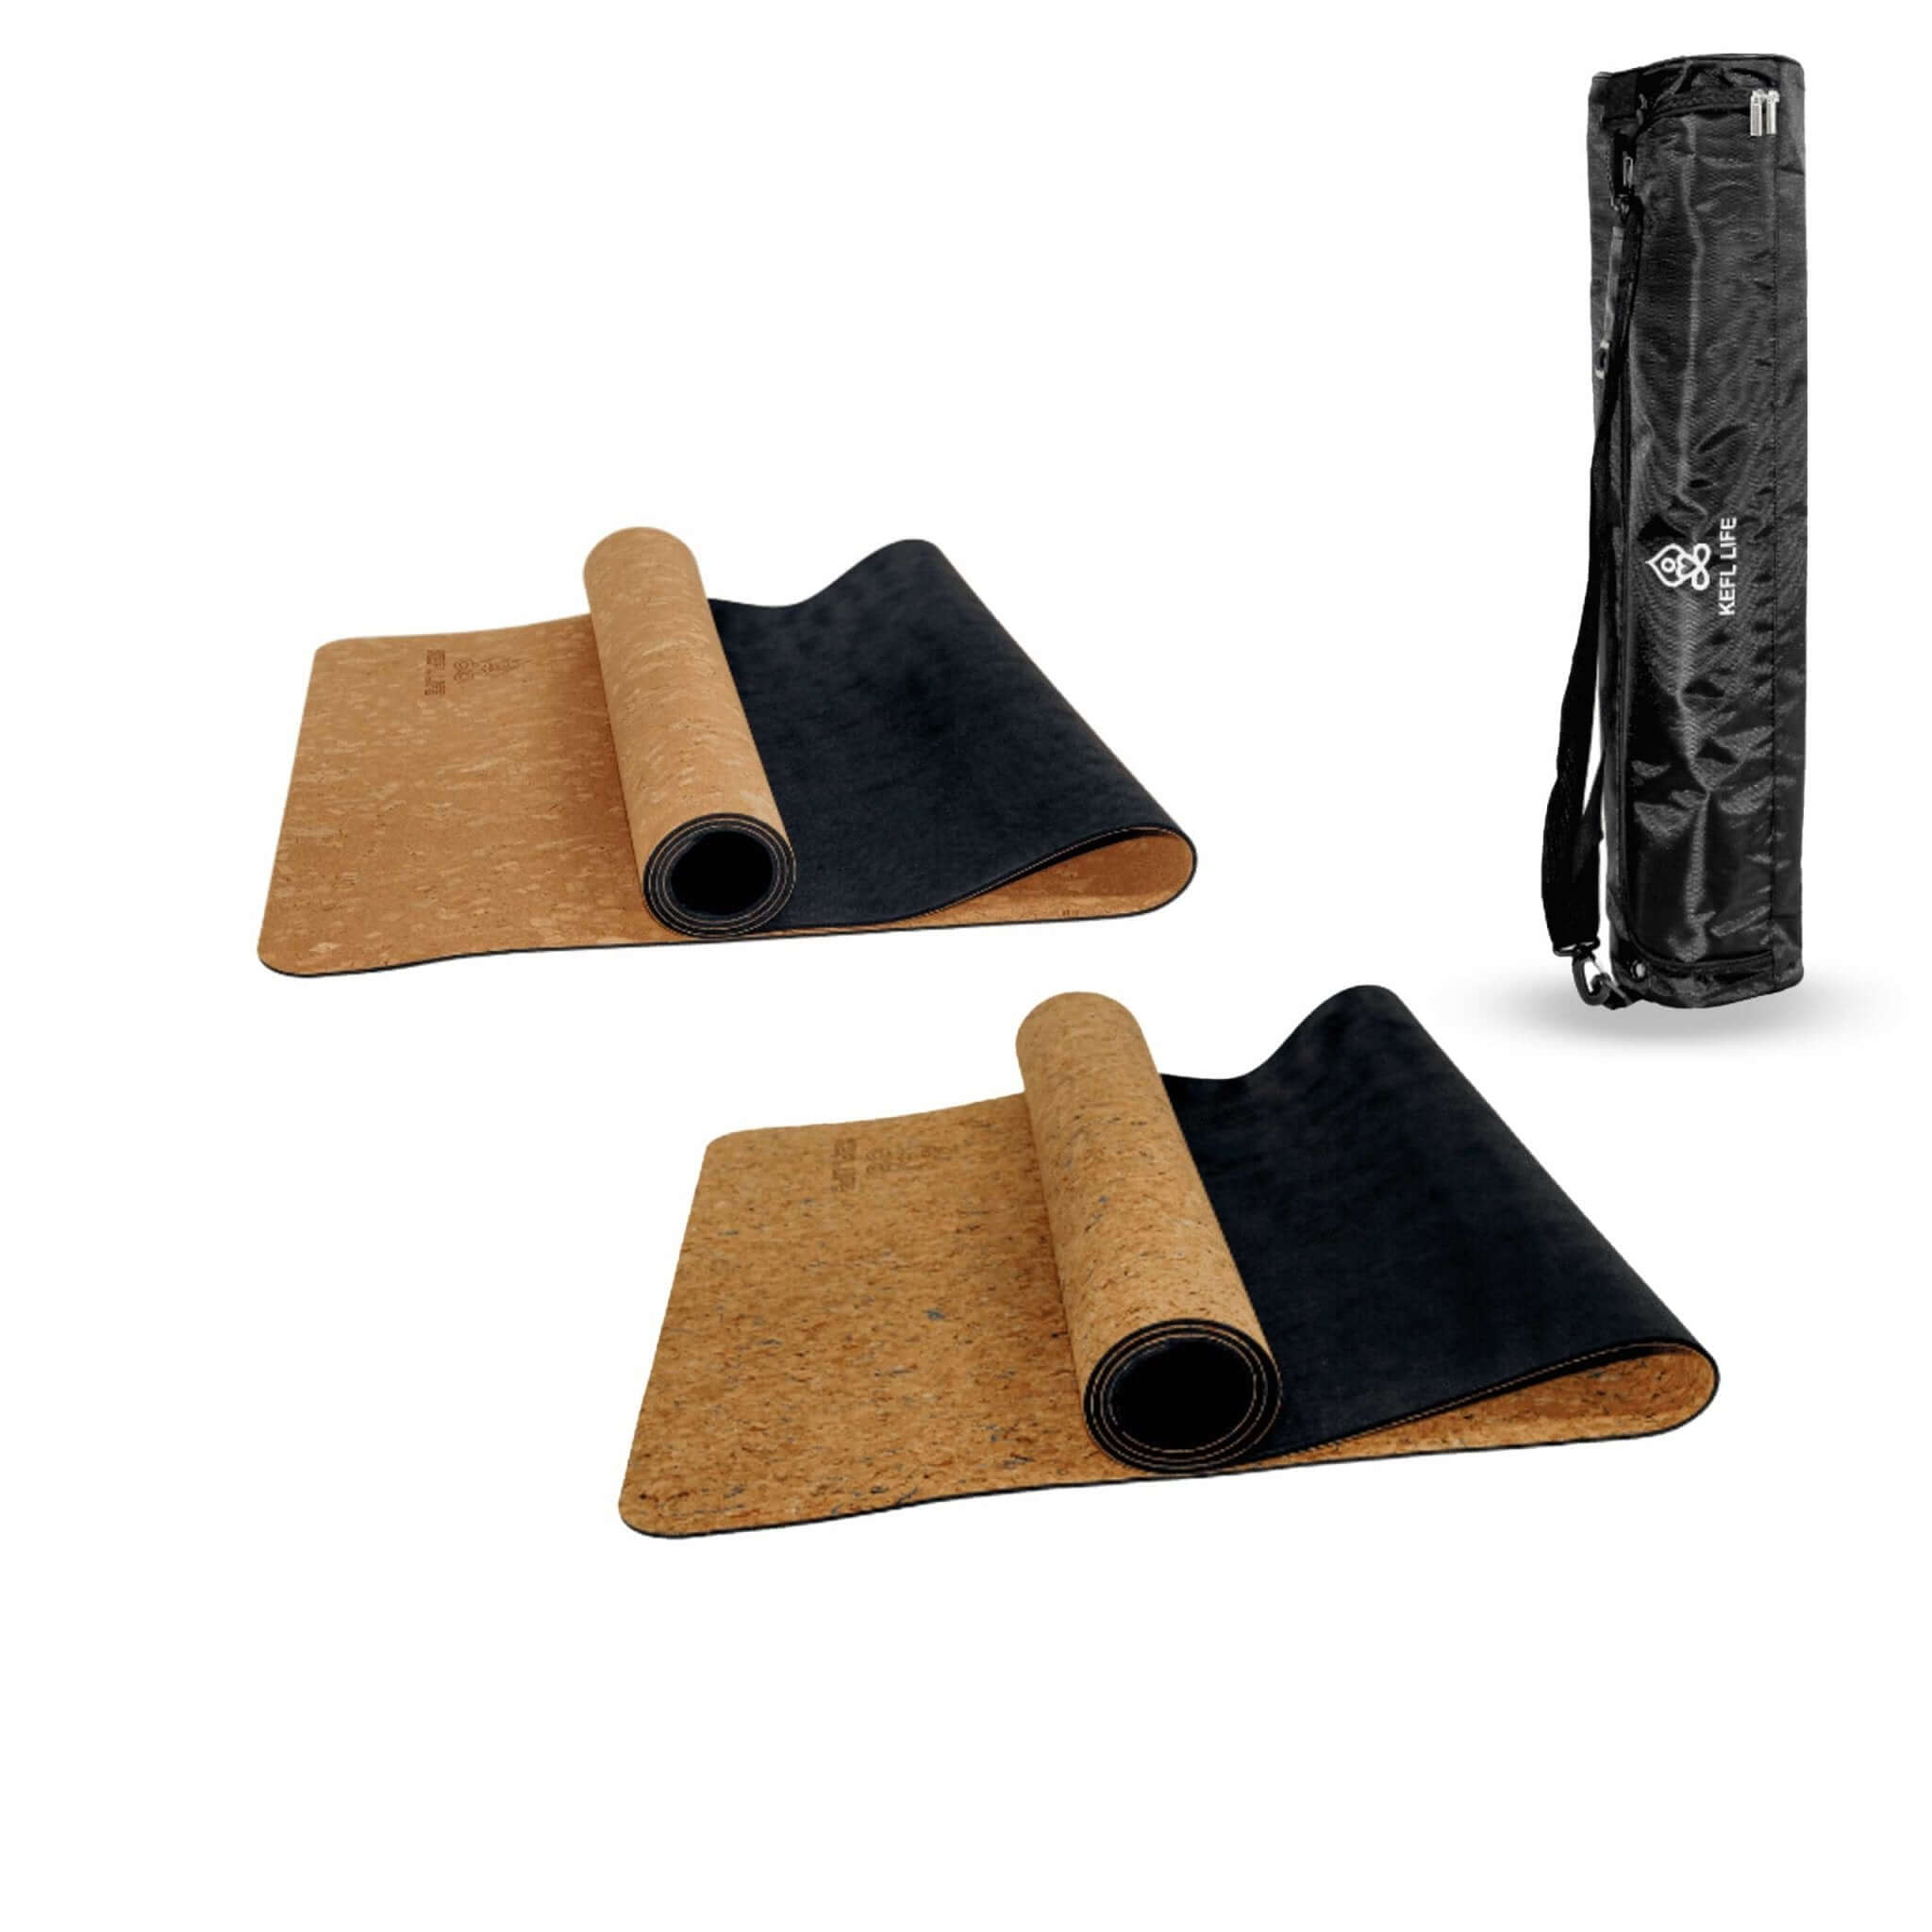 KEFL Cork Rubber Yoga Mats - with Free Carrying Bag - KEFLUK